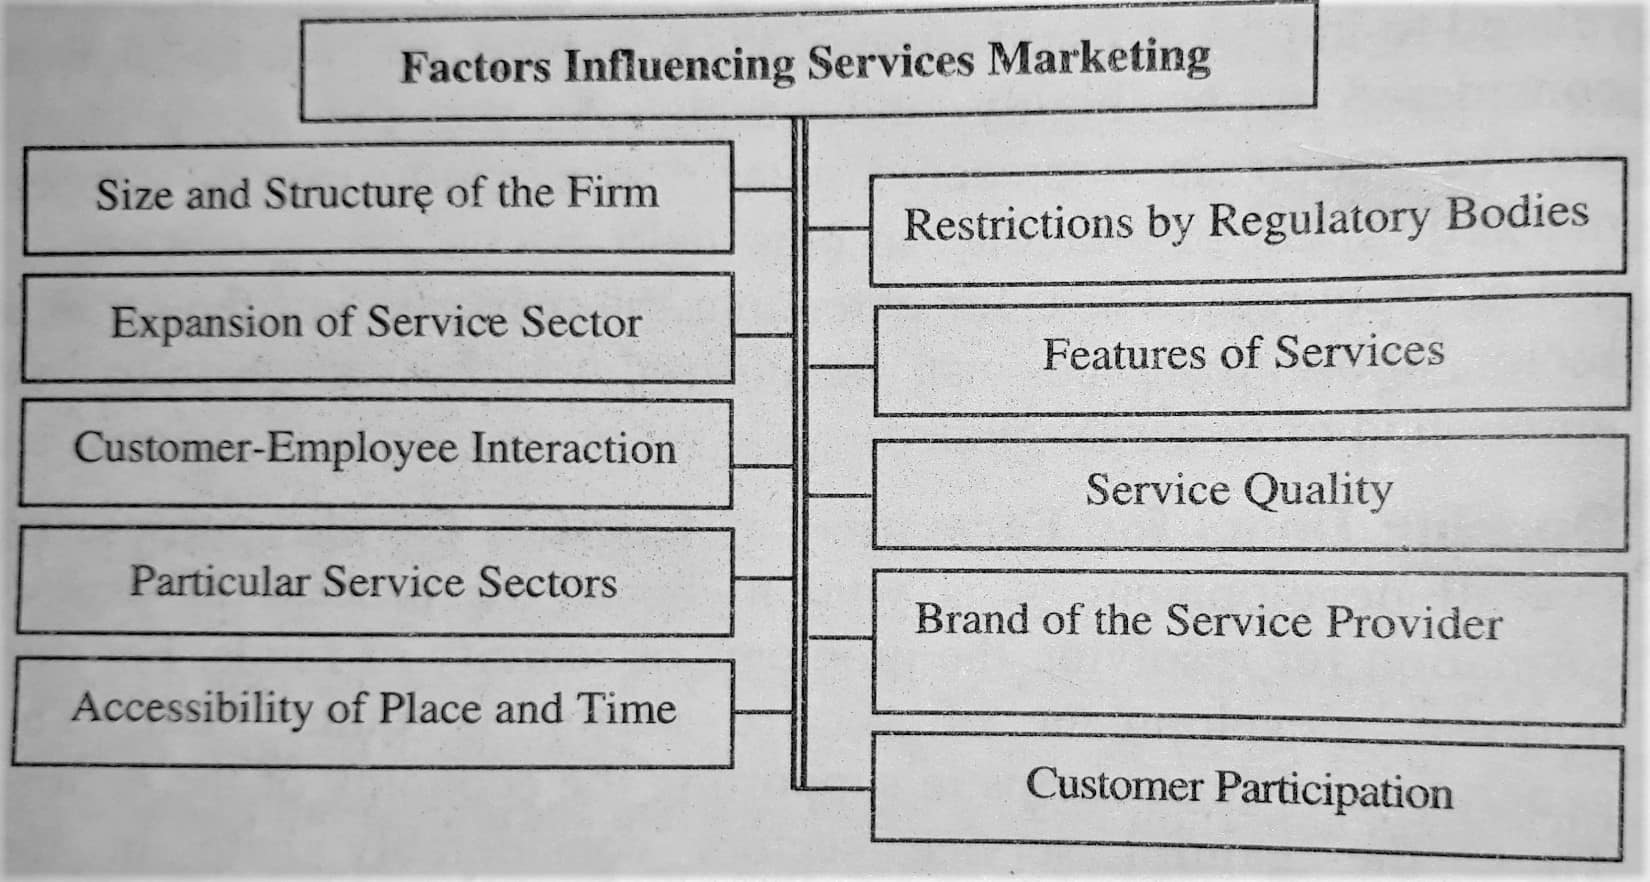 Factors Influencing Services Marketing